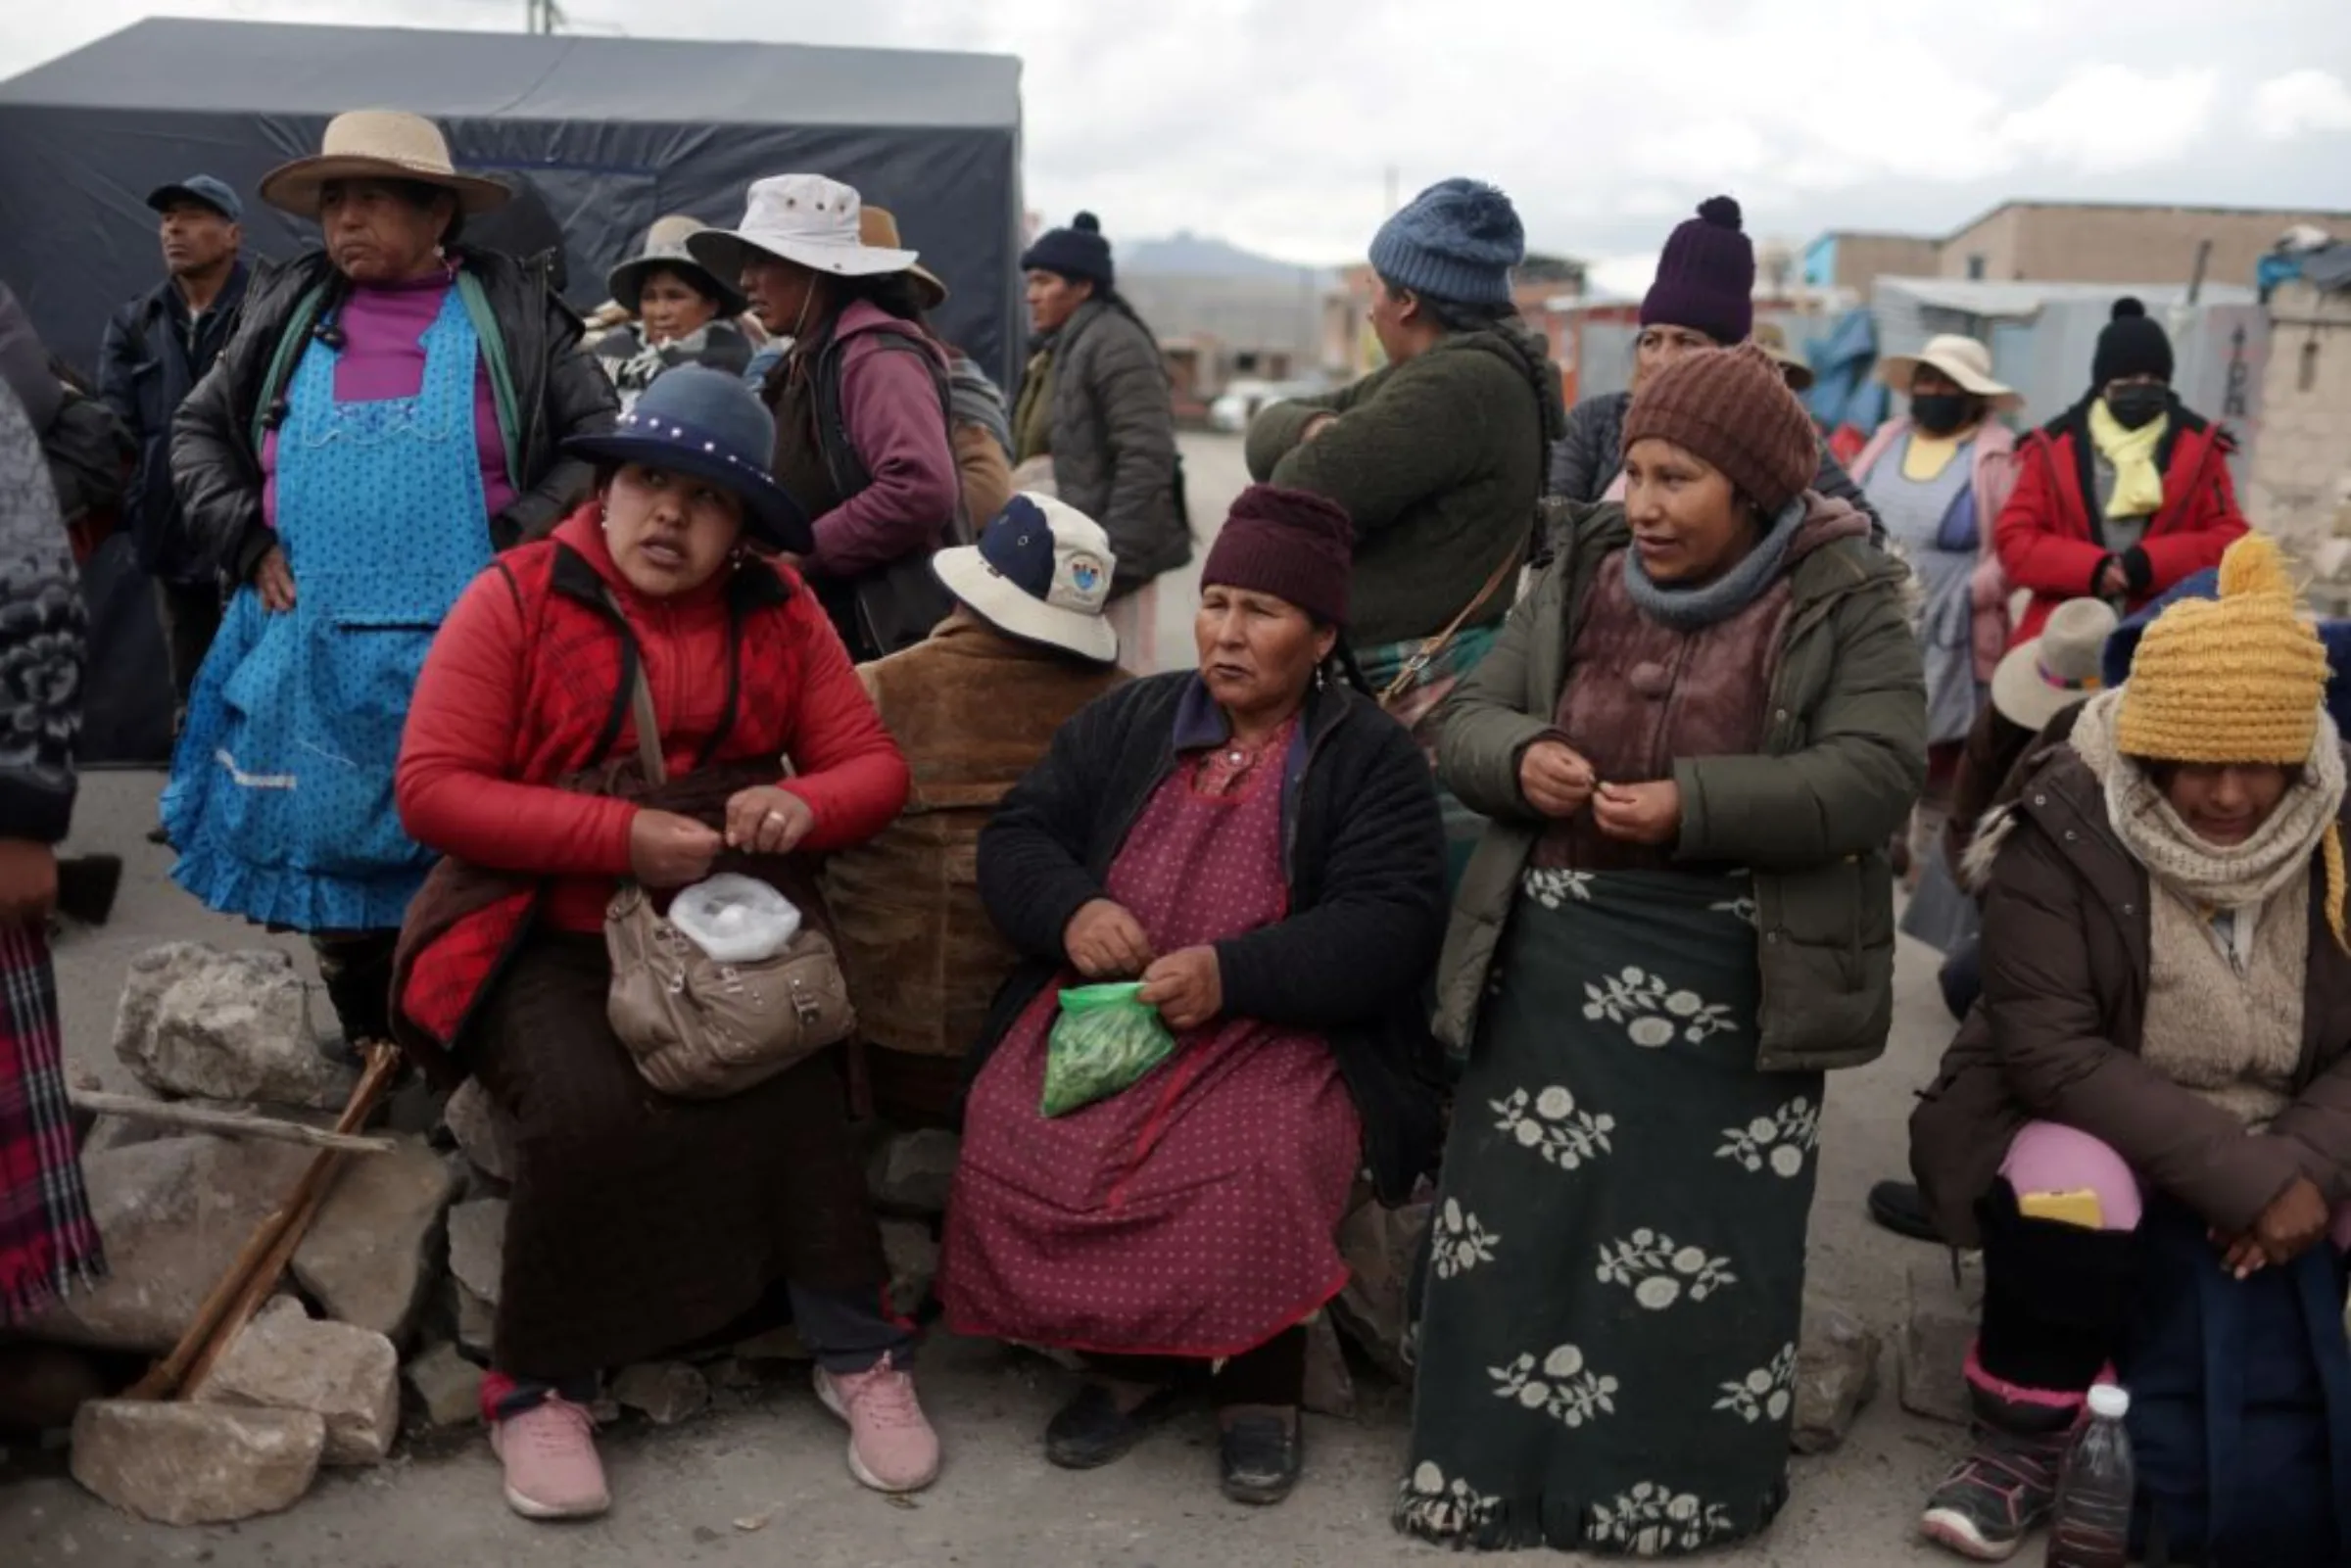 Anti-government protesters block a road to demand Peru's President Dina Boluarte to step down, in Condoroma in Cusco region, Peru February 4, 2023